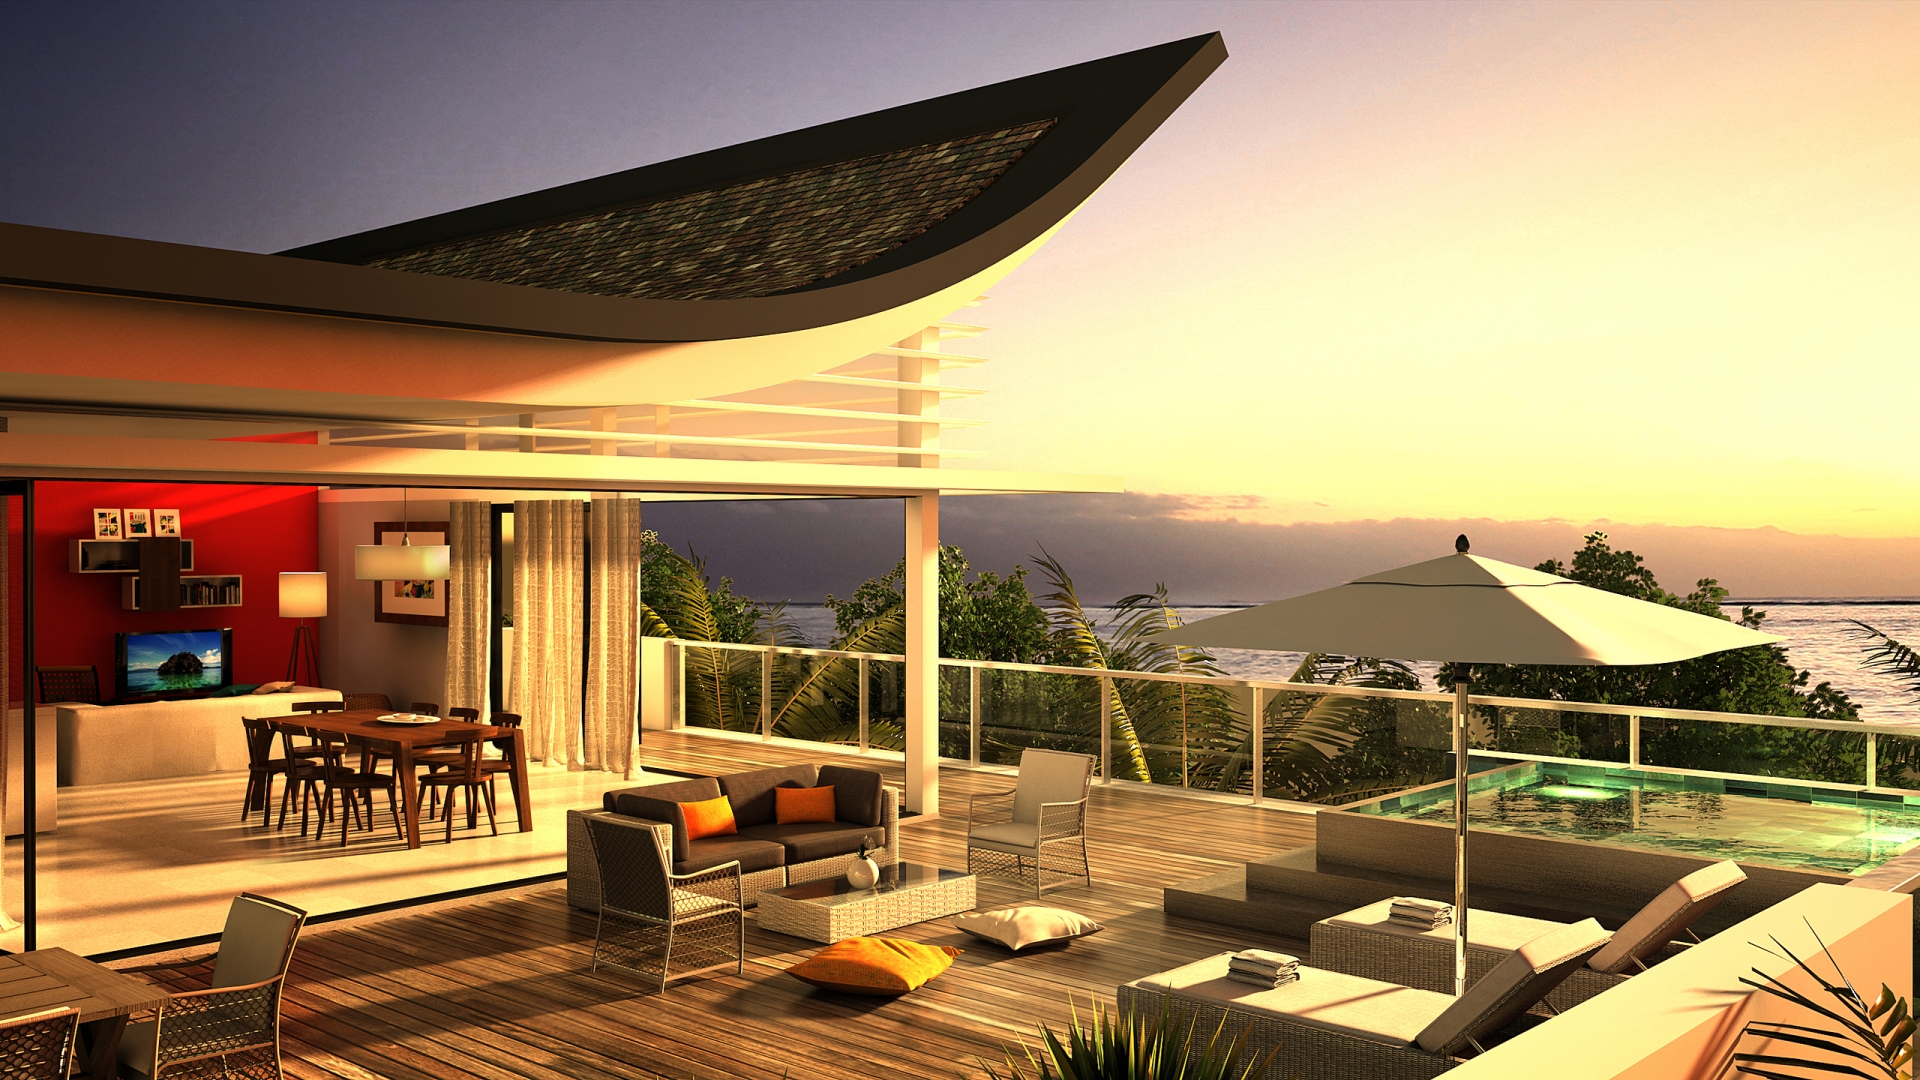 Luxury Villa Terrace View for 1920 x 1080 HDTV 1080p resolution